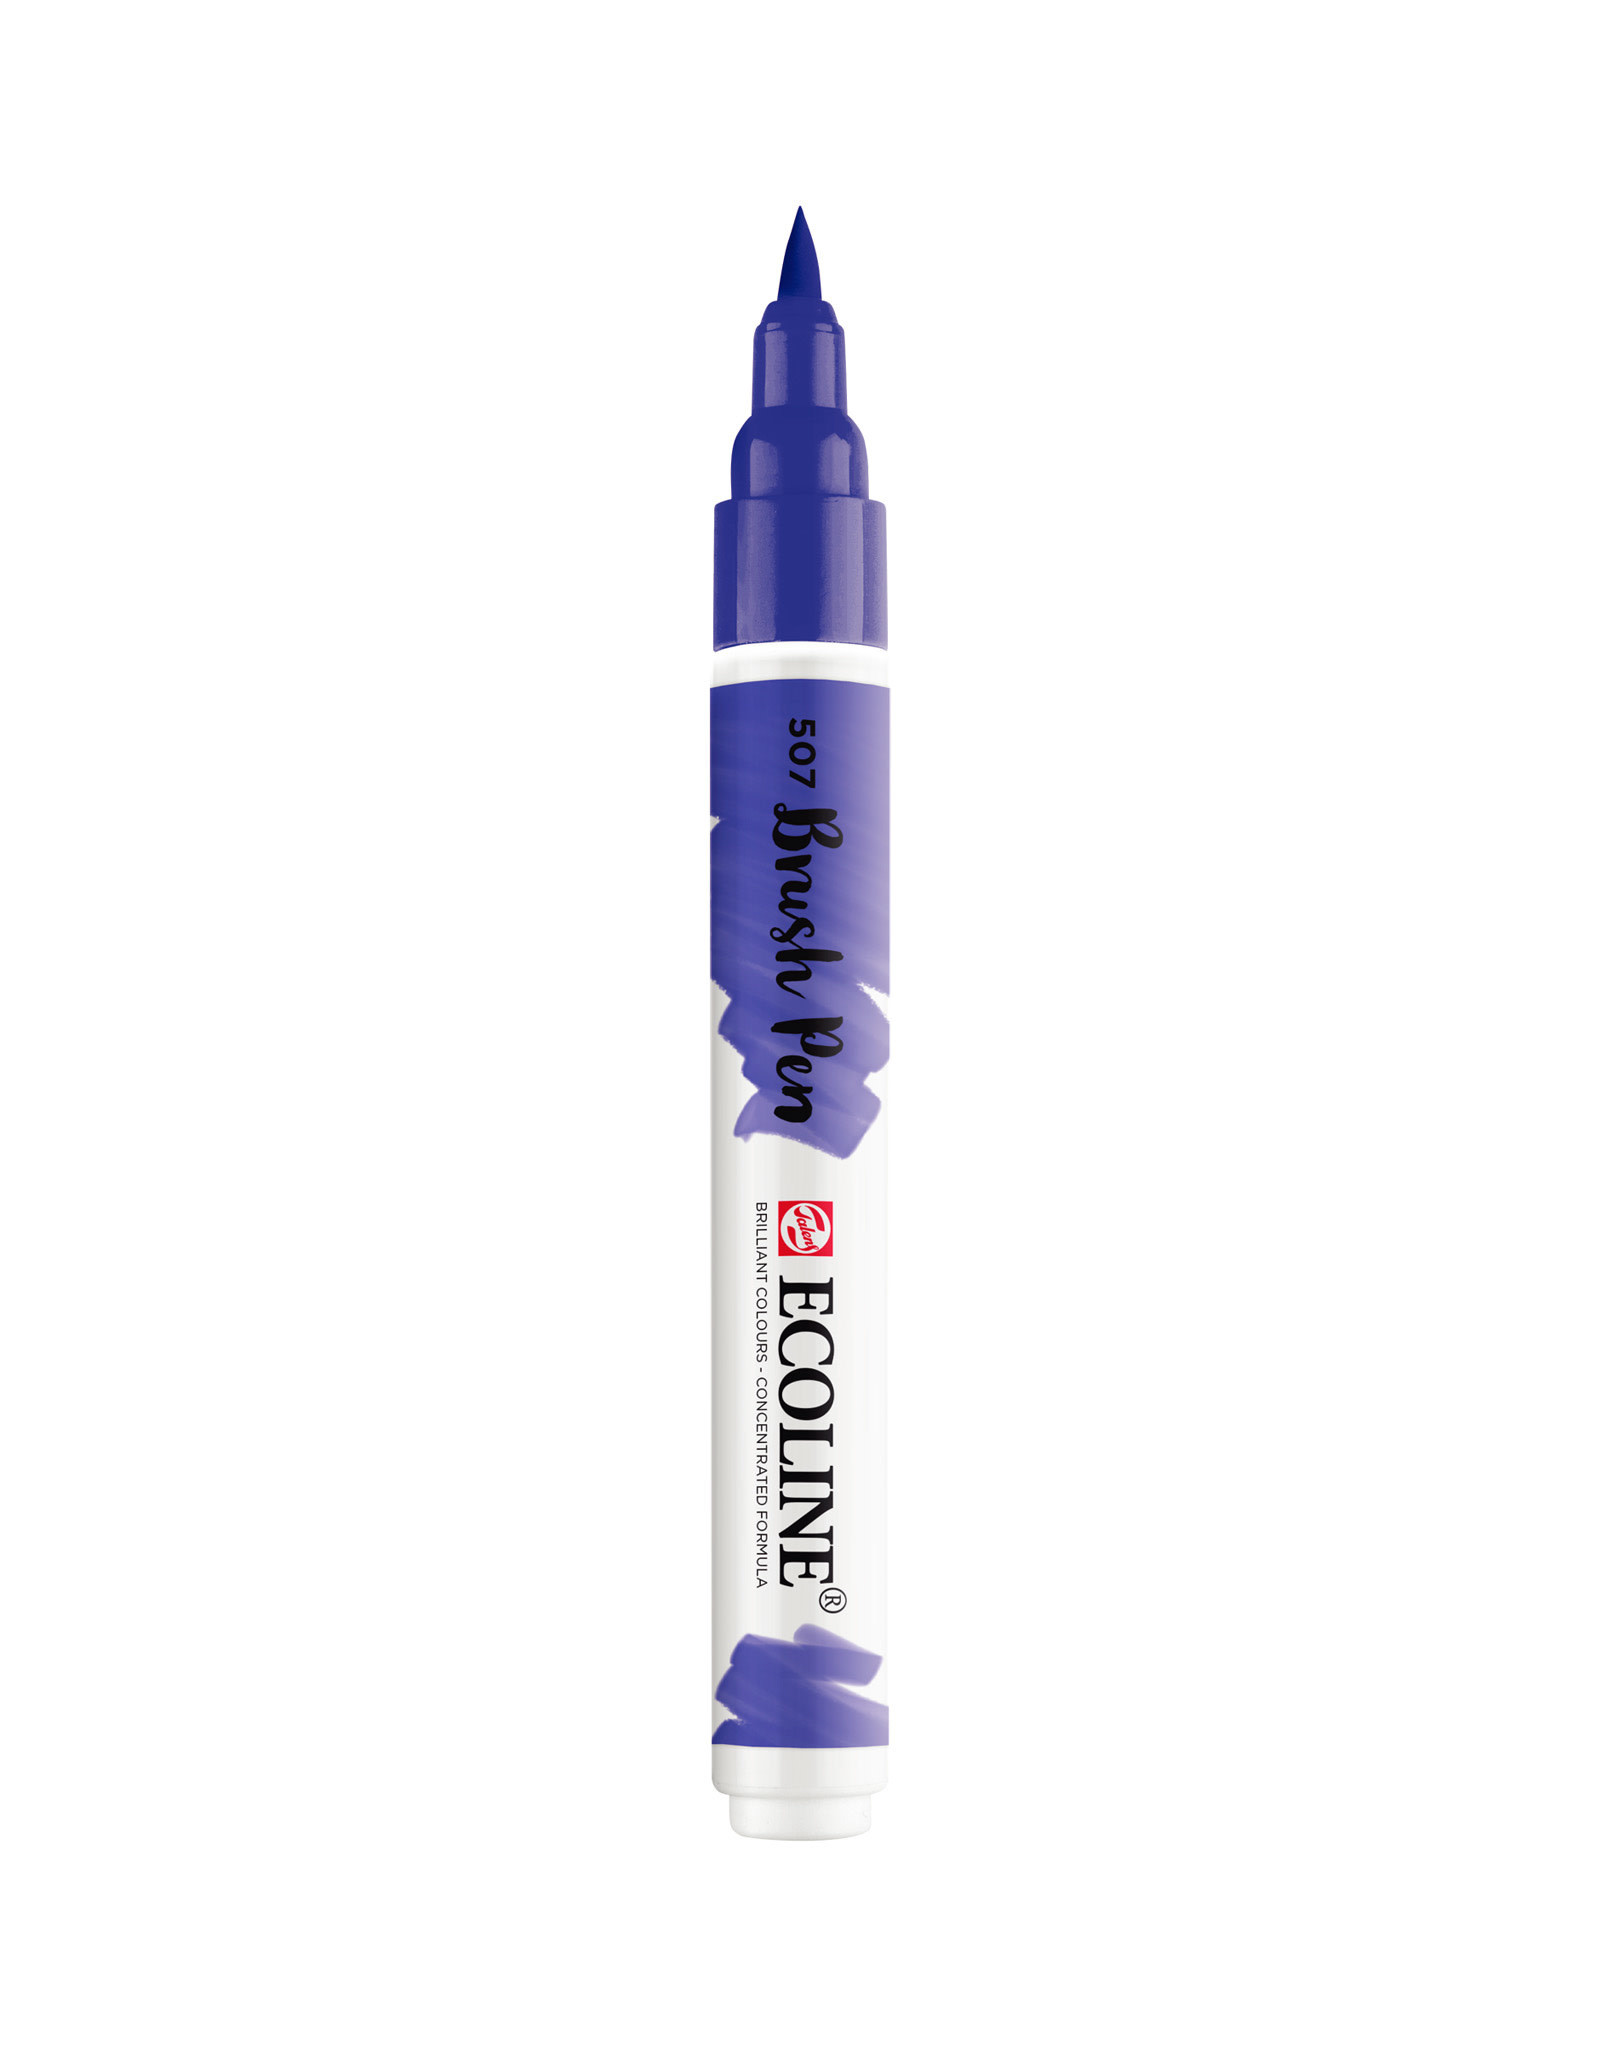 Royal Talens Ecoline Watercolour Brush Pen, Ultramarine Violet